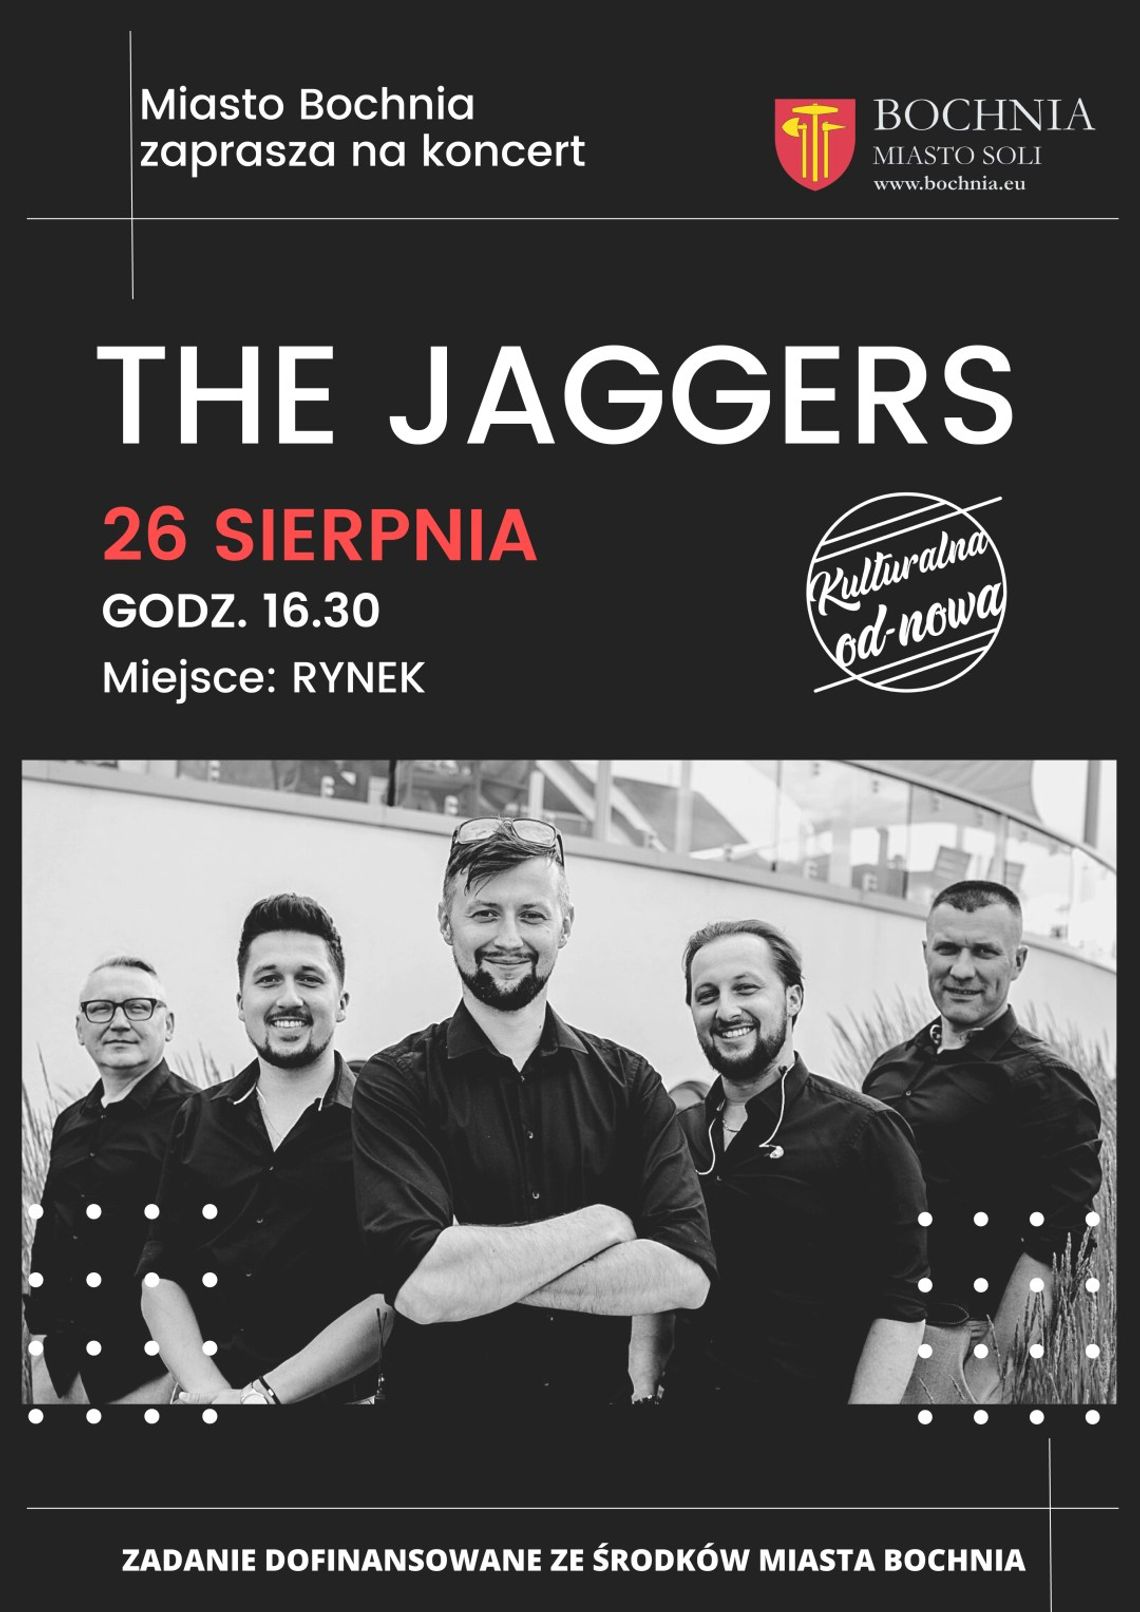 Kulturalna od-nowa: koncert „The Jaggers” na Rynku w Bochni